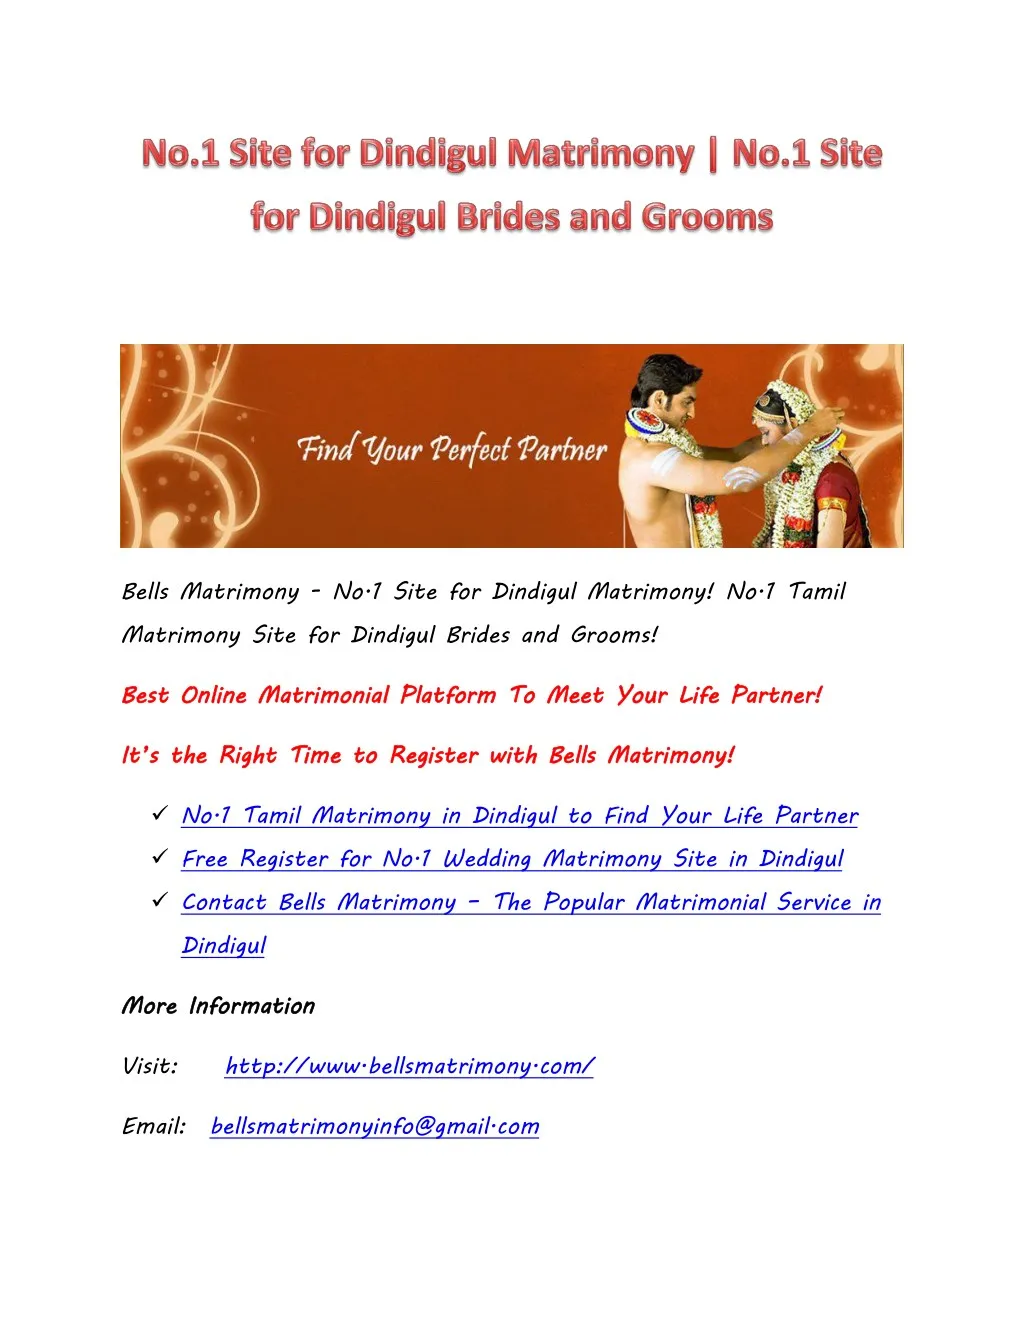 bells matrimony no 1 site for dindigul matrimony